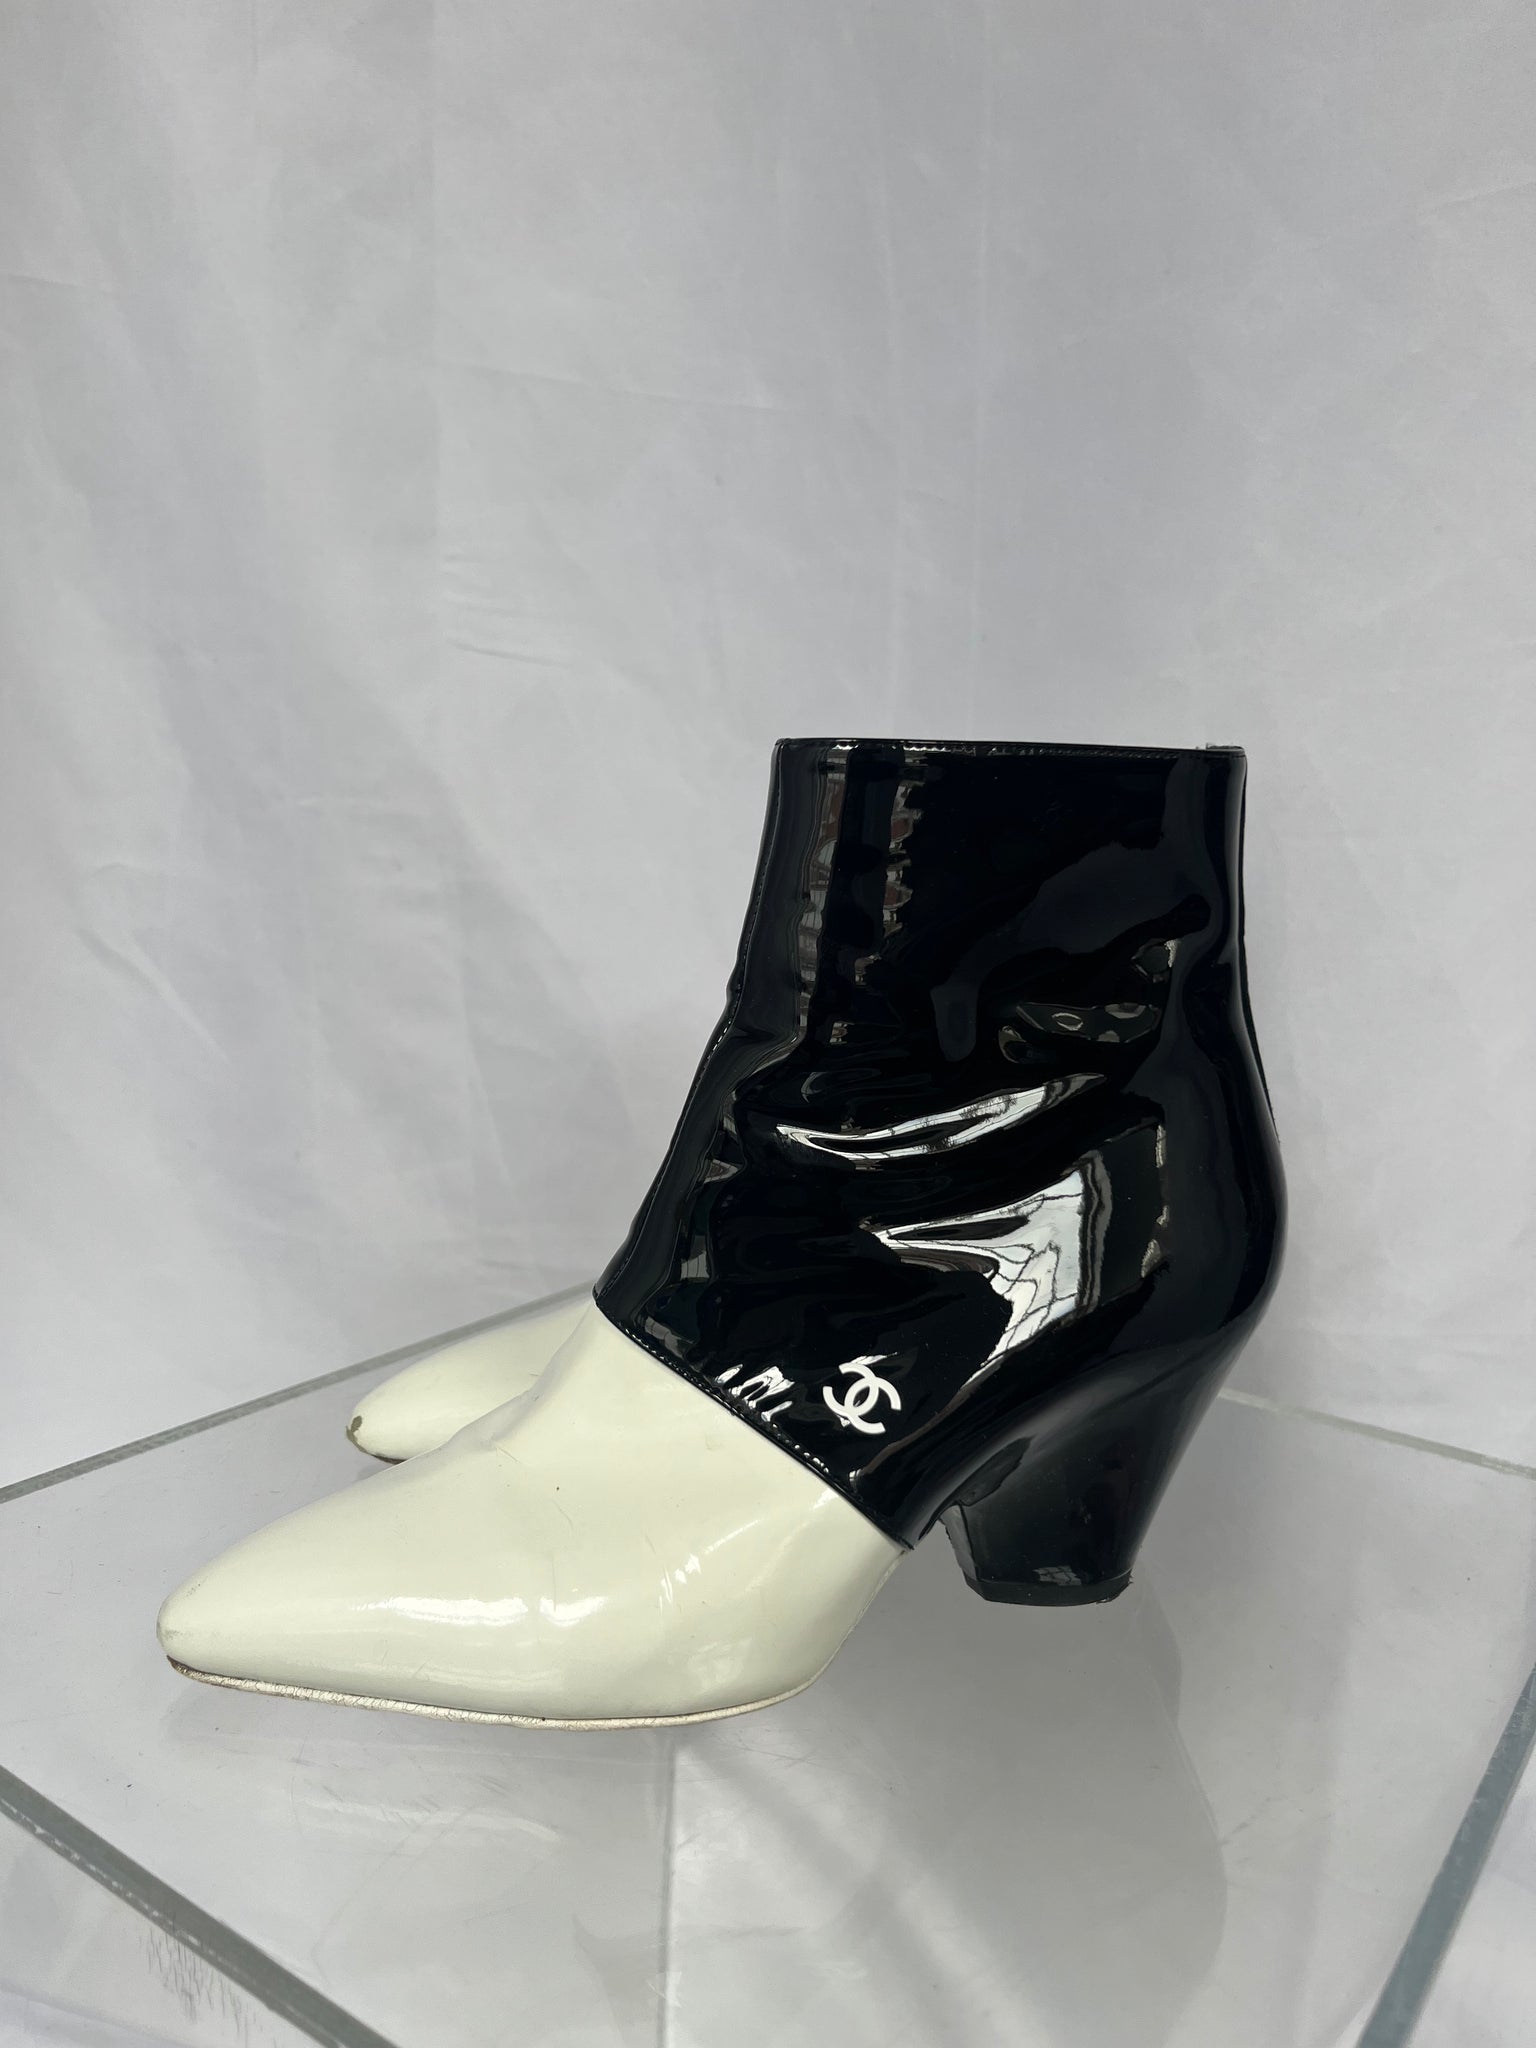 Chanel black/white boot